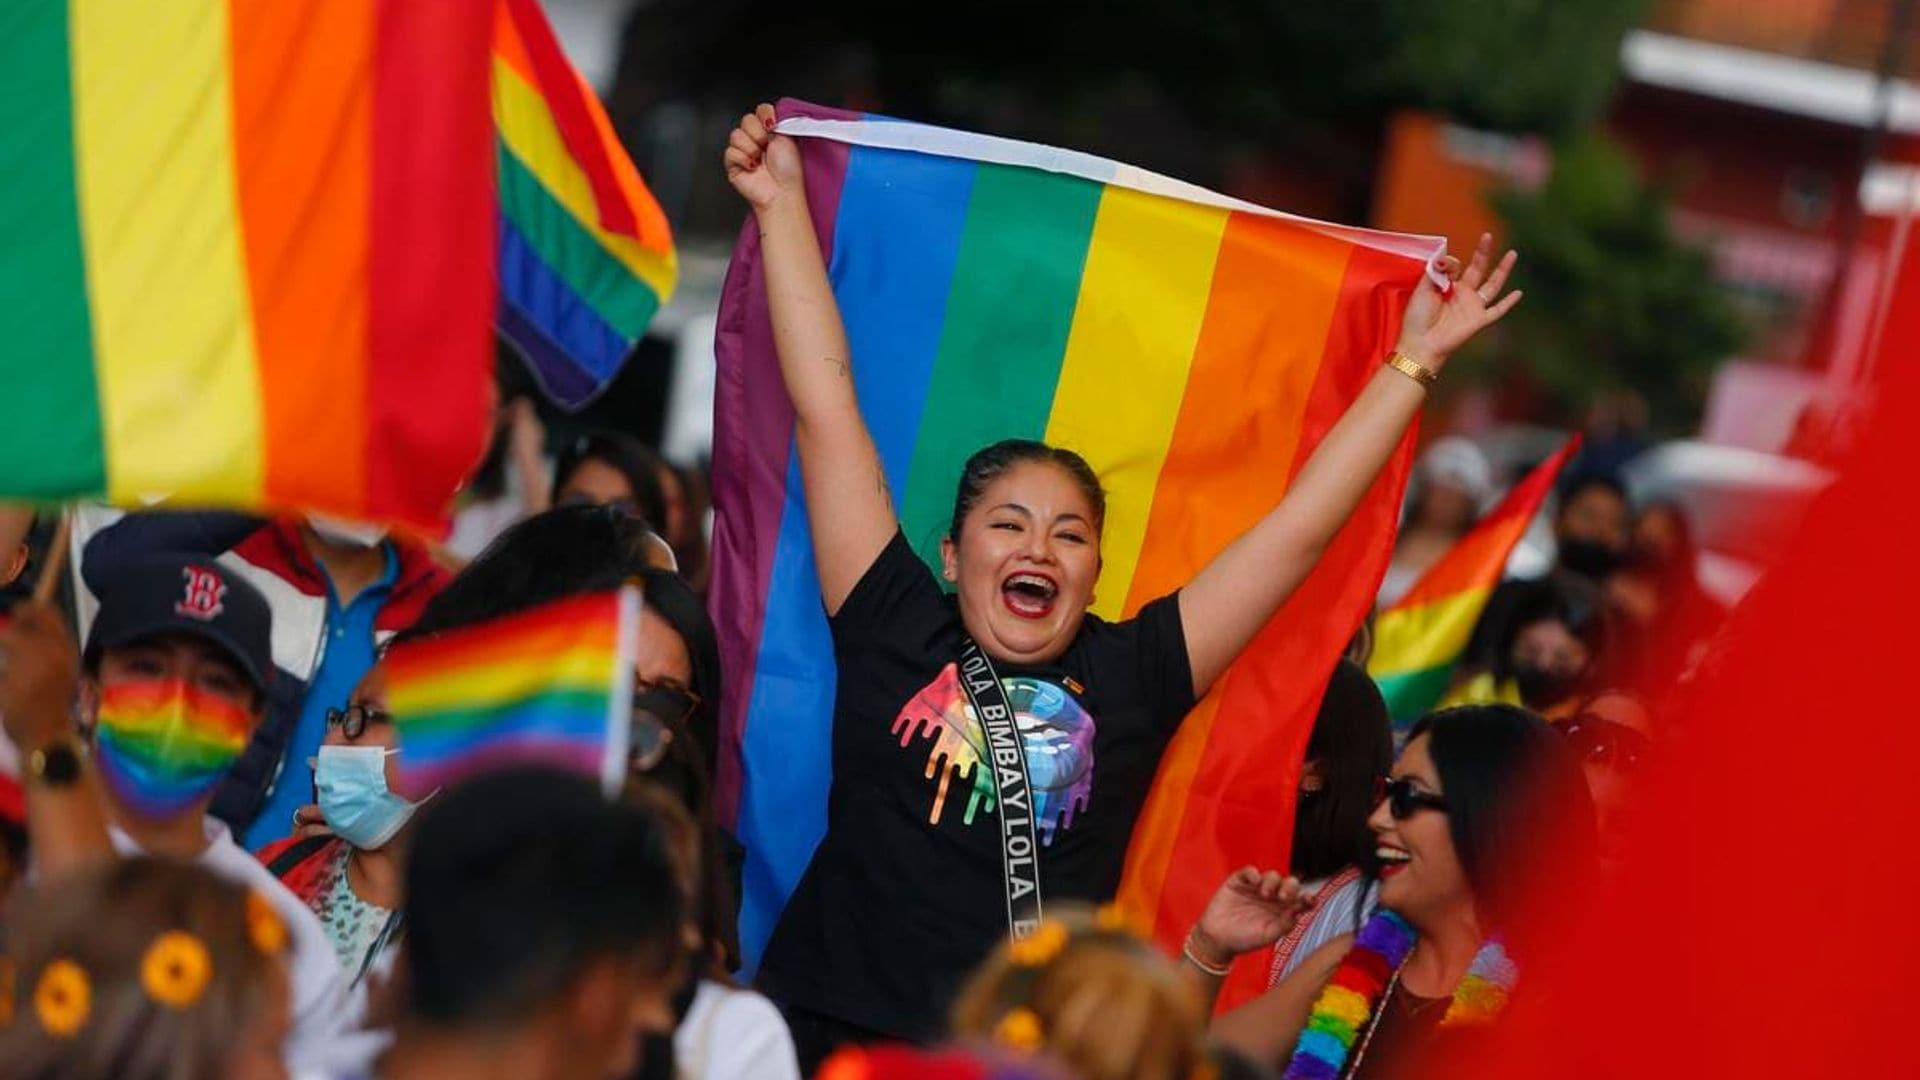 A participant chants slogans while holding a rainbow flag